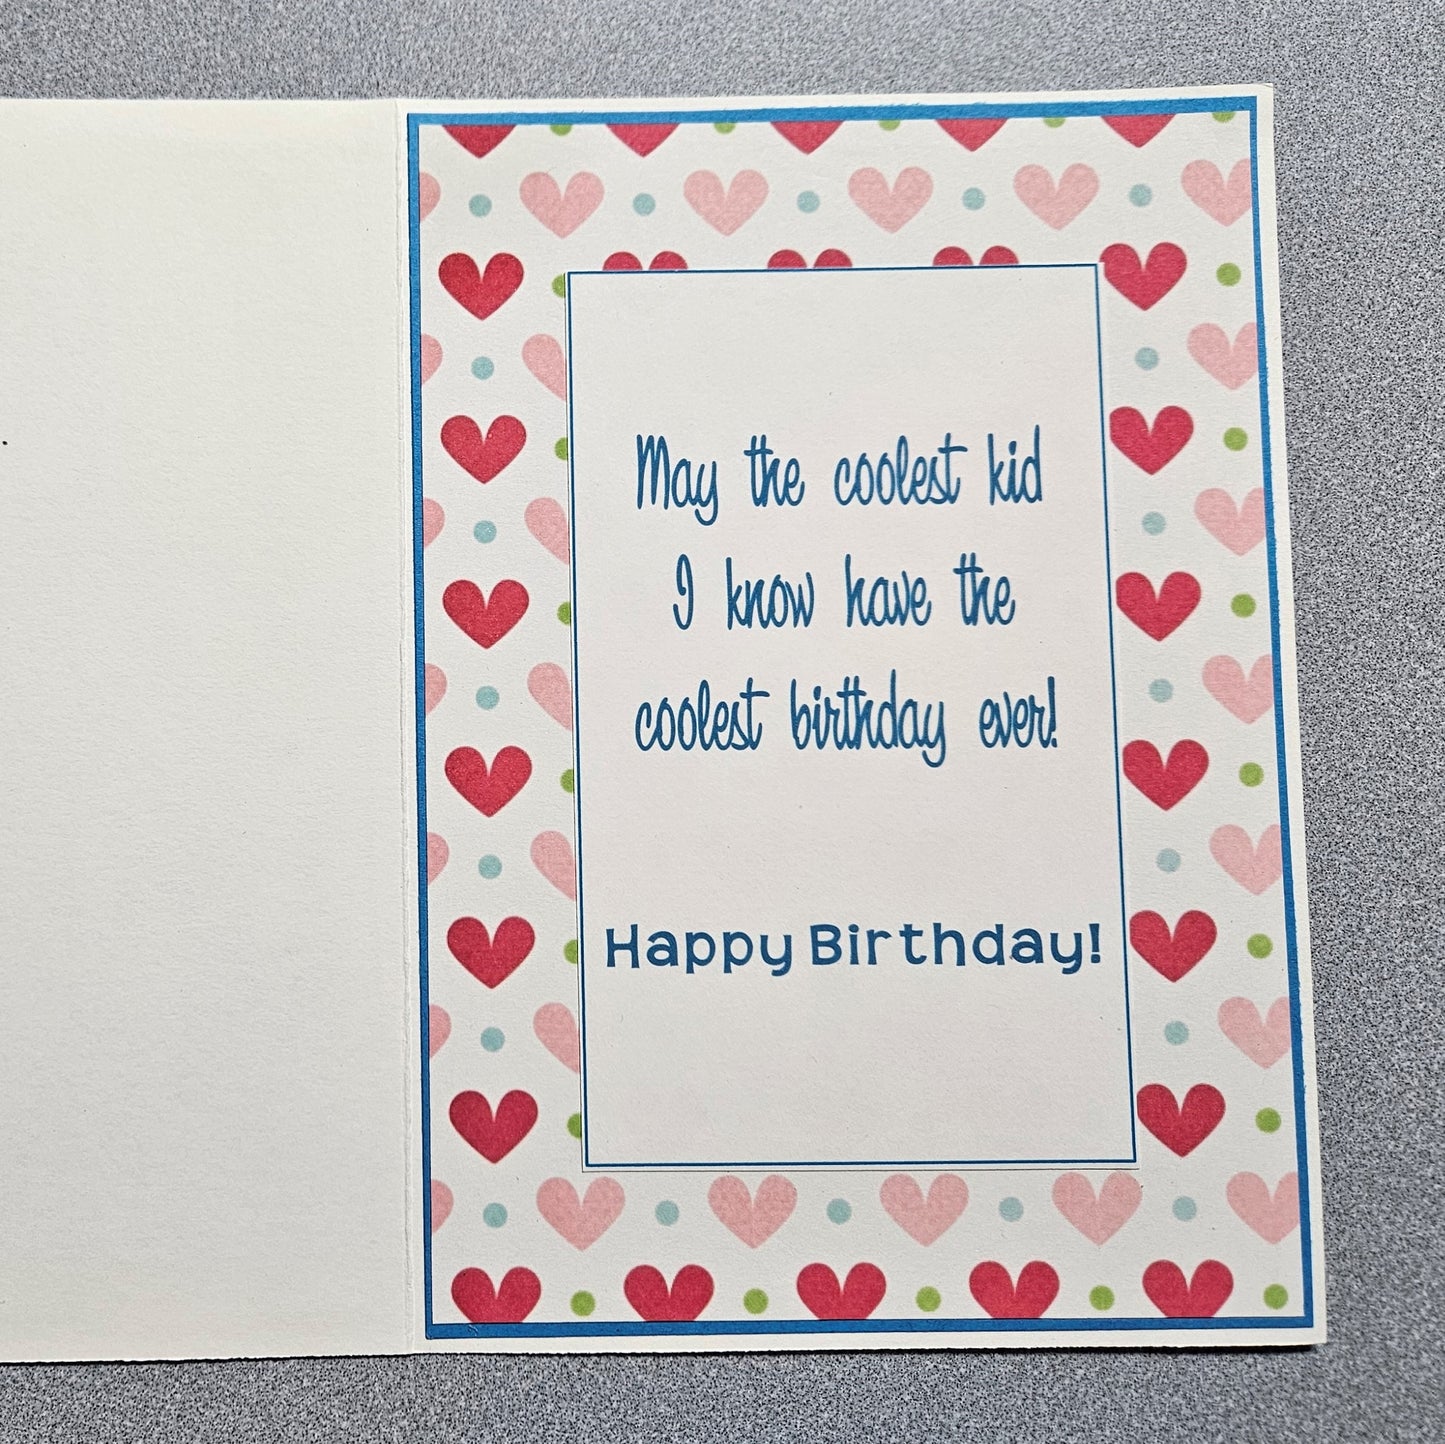 Stitch Birthday Card